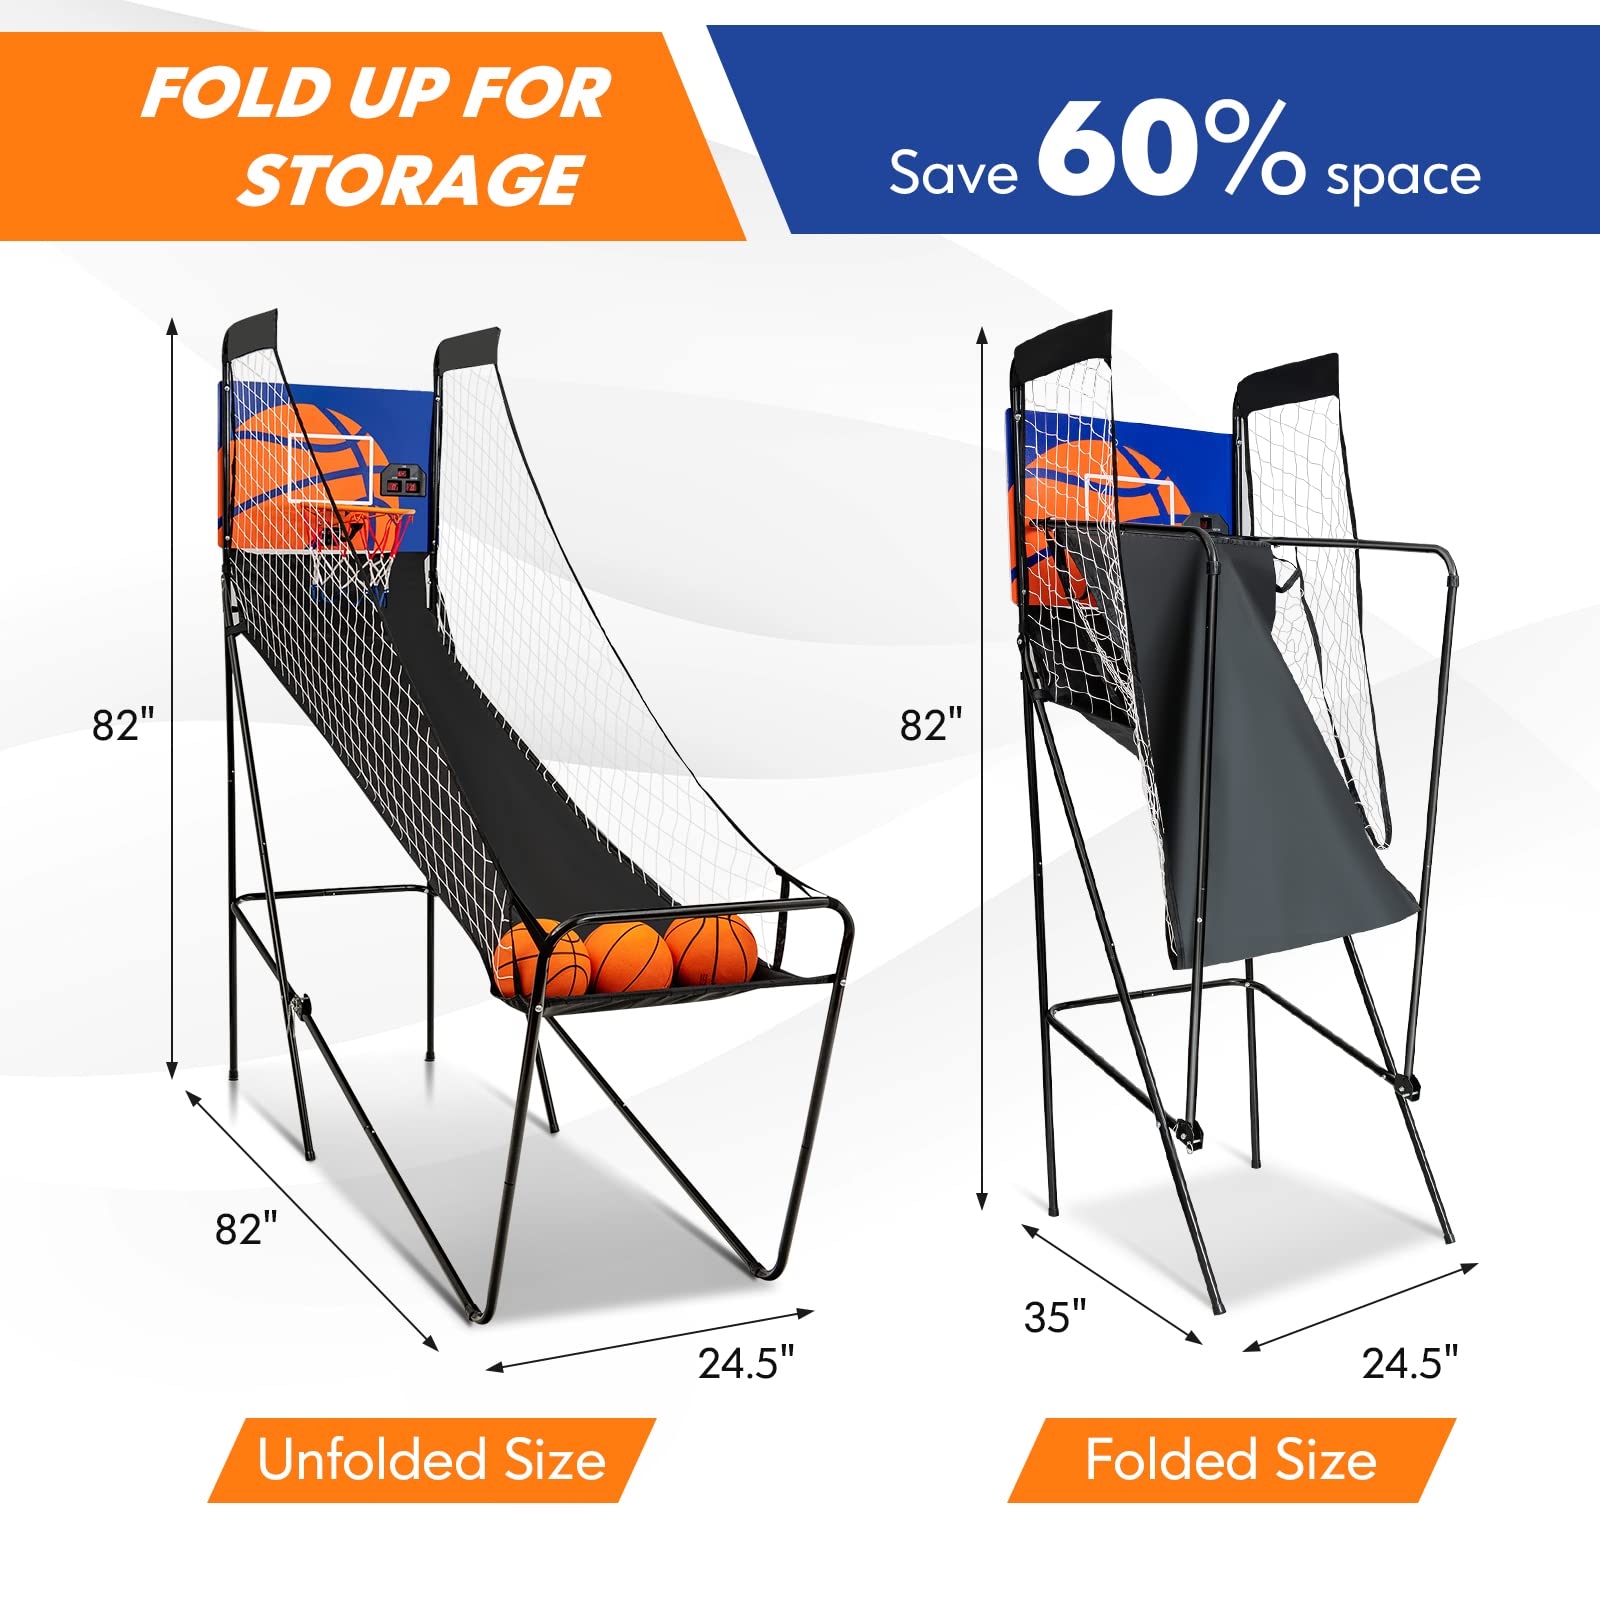 Goplus Foldable Indoor Basketball Arcade Game, Electronic Basketball Single Shootout Games Machine with 3 Balls